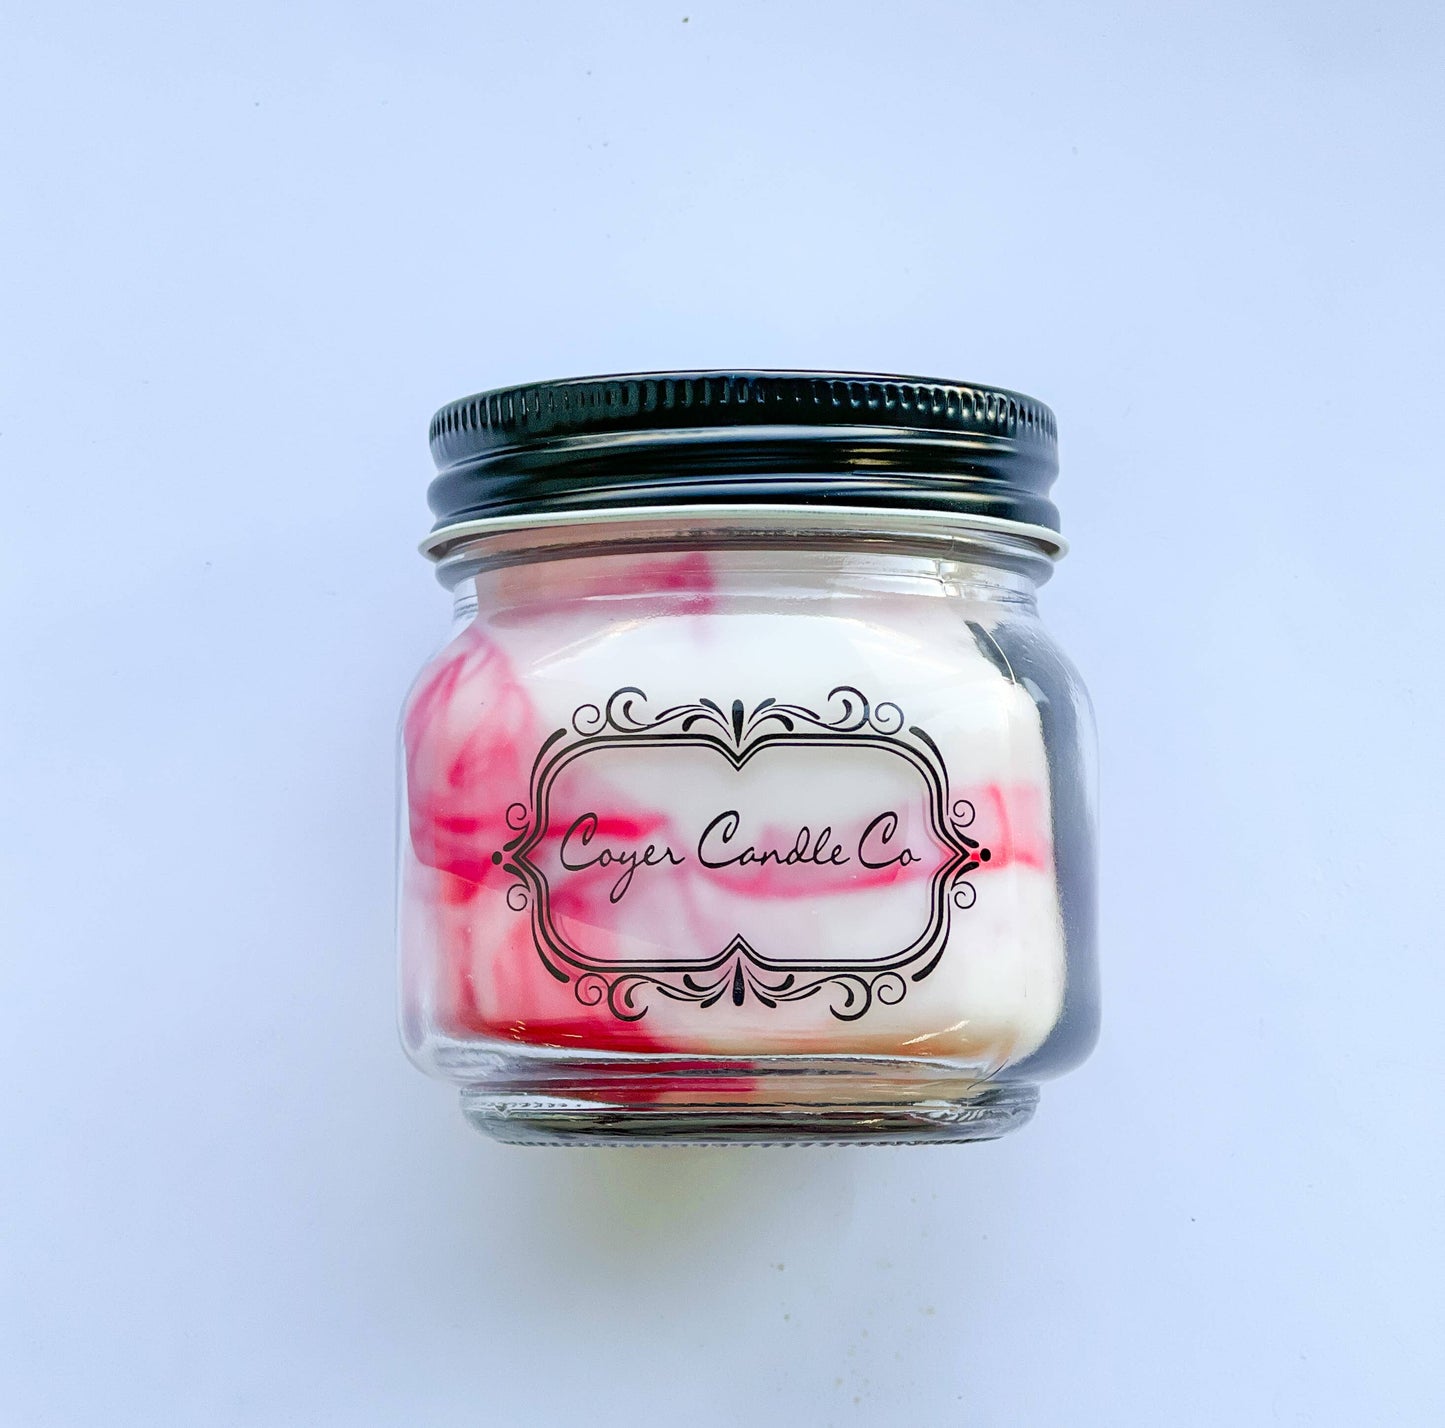 8 oz. Mason Jar Candles - Fall Collection: Pumpkin Dreams